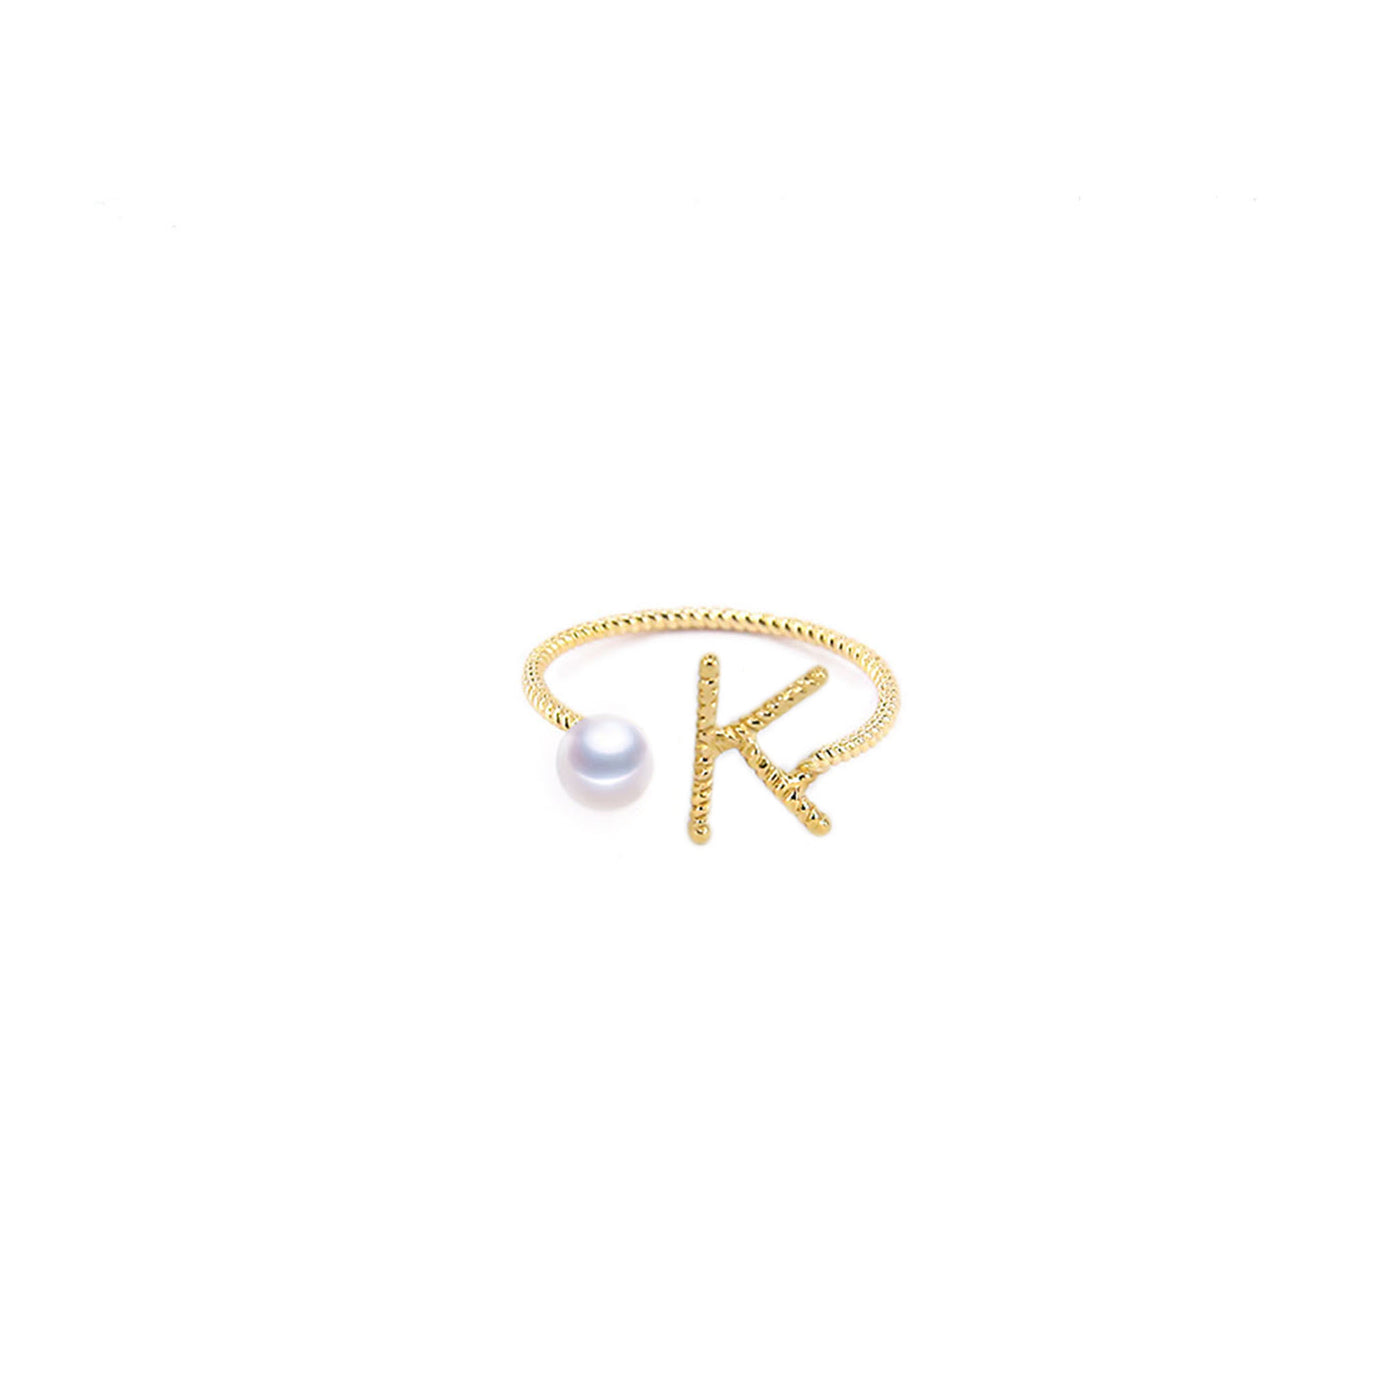 Initial Letter K Ring | Angela Jewellery Australia